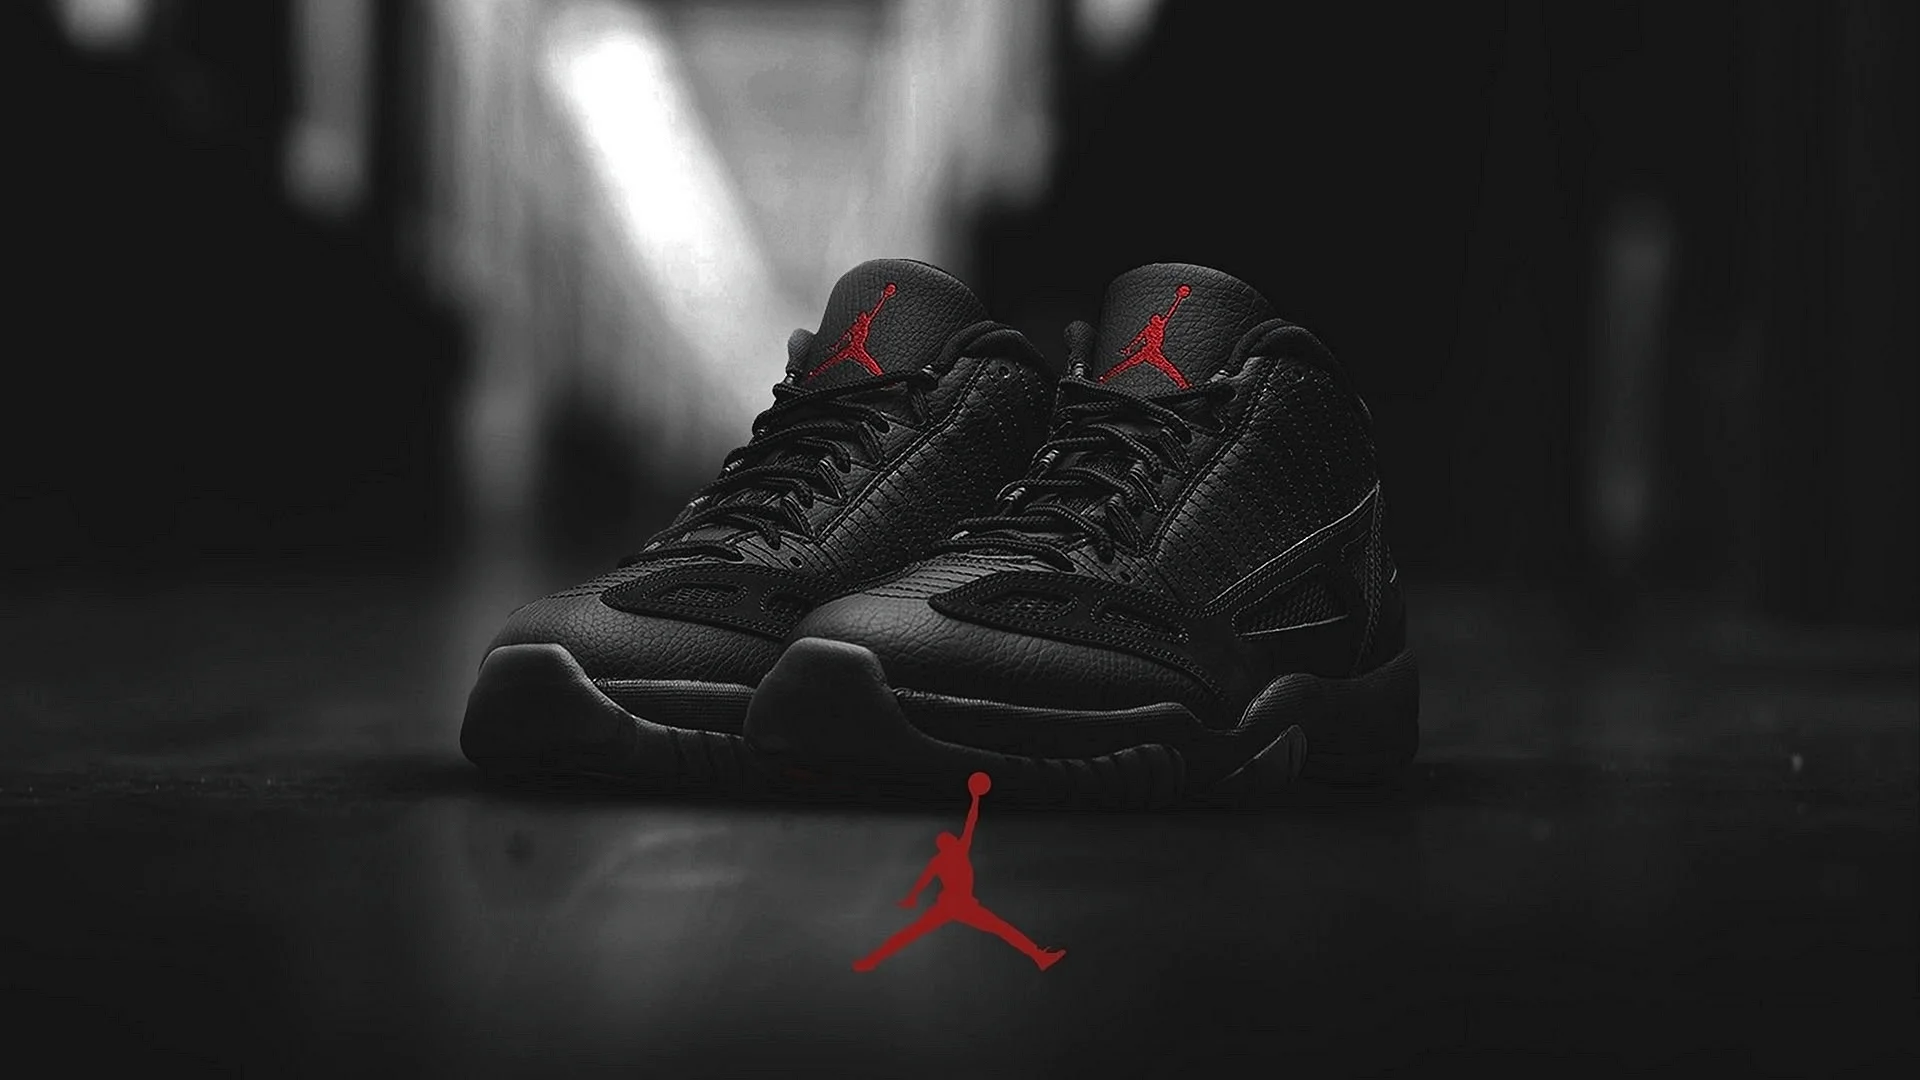 Nike Air Jordan 11